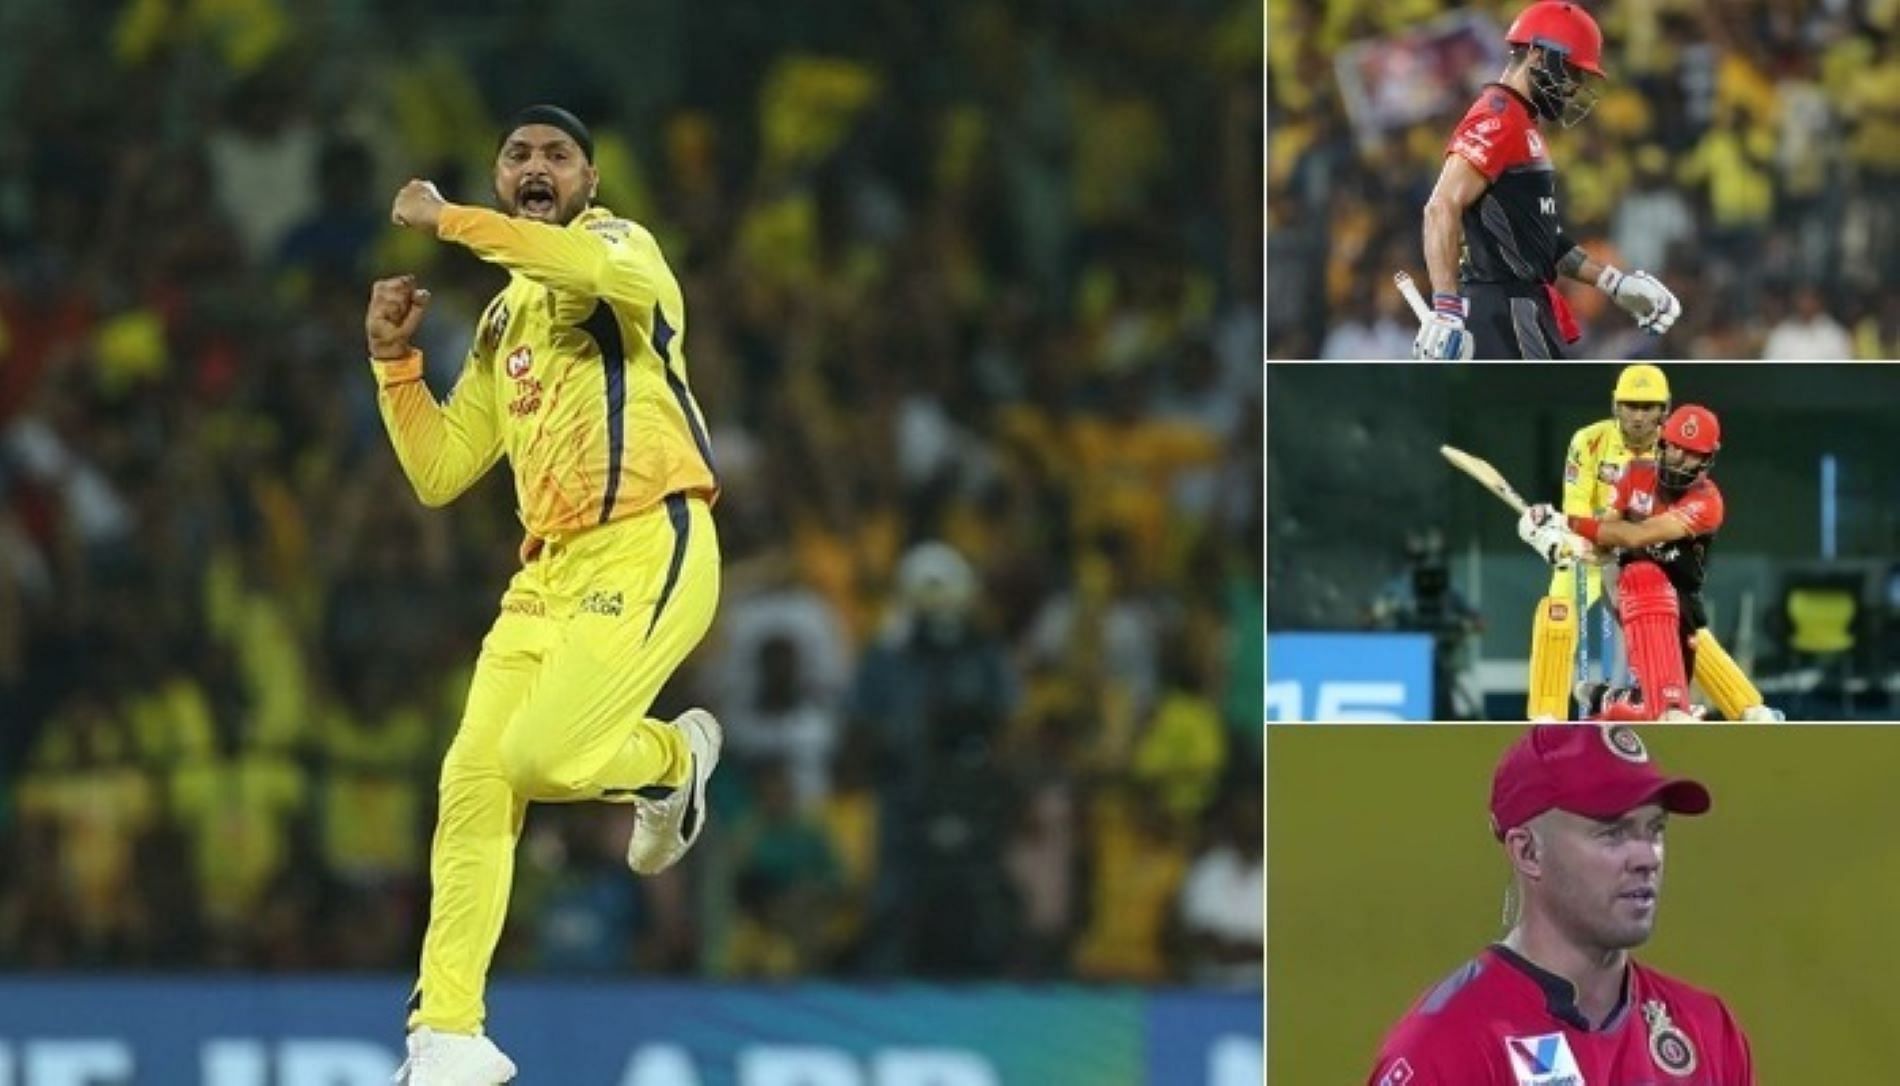 Bhaji bagged the big wickets of Virat Kohli and AB de Villiers in IPL 2019